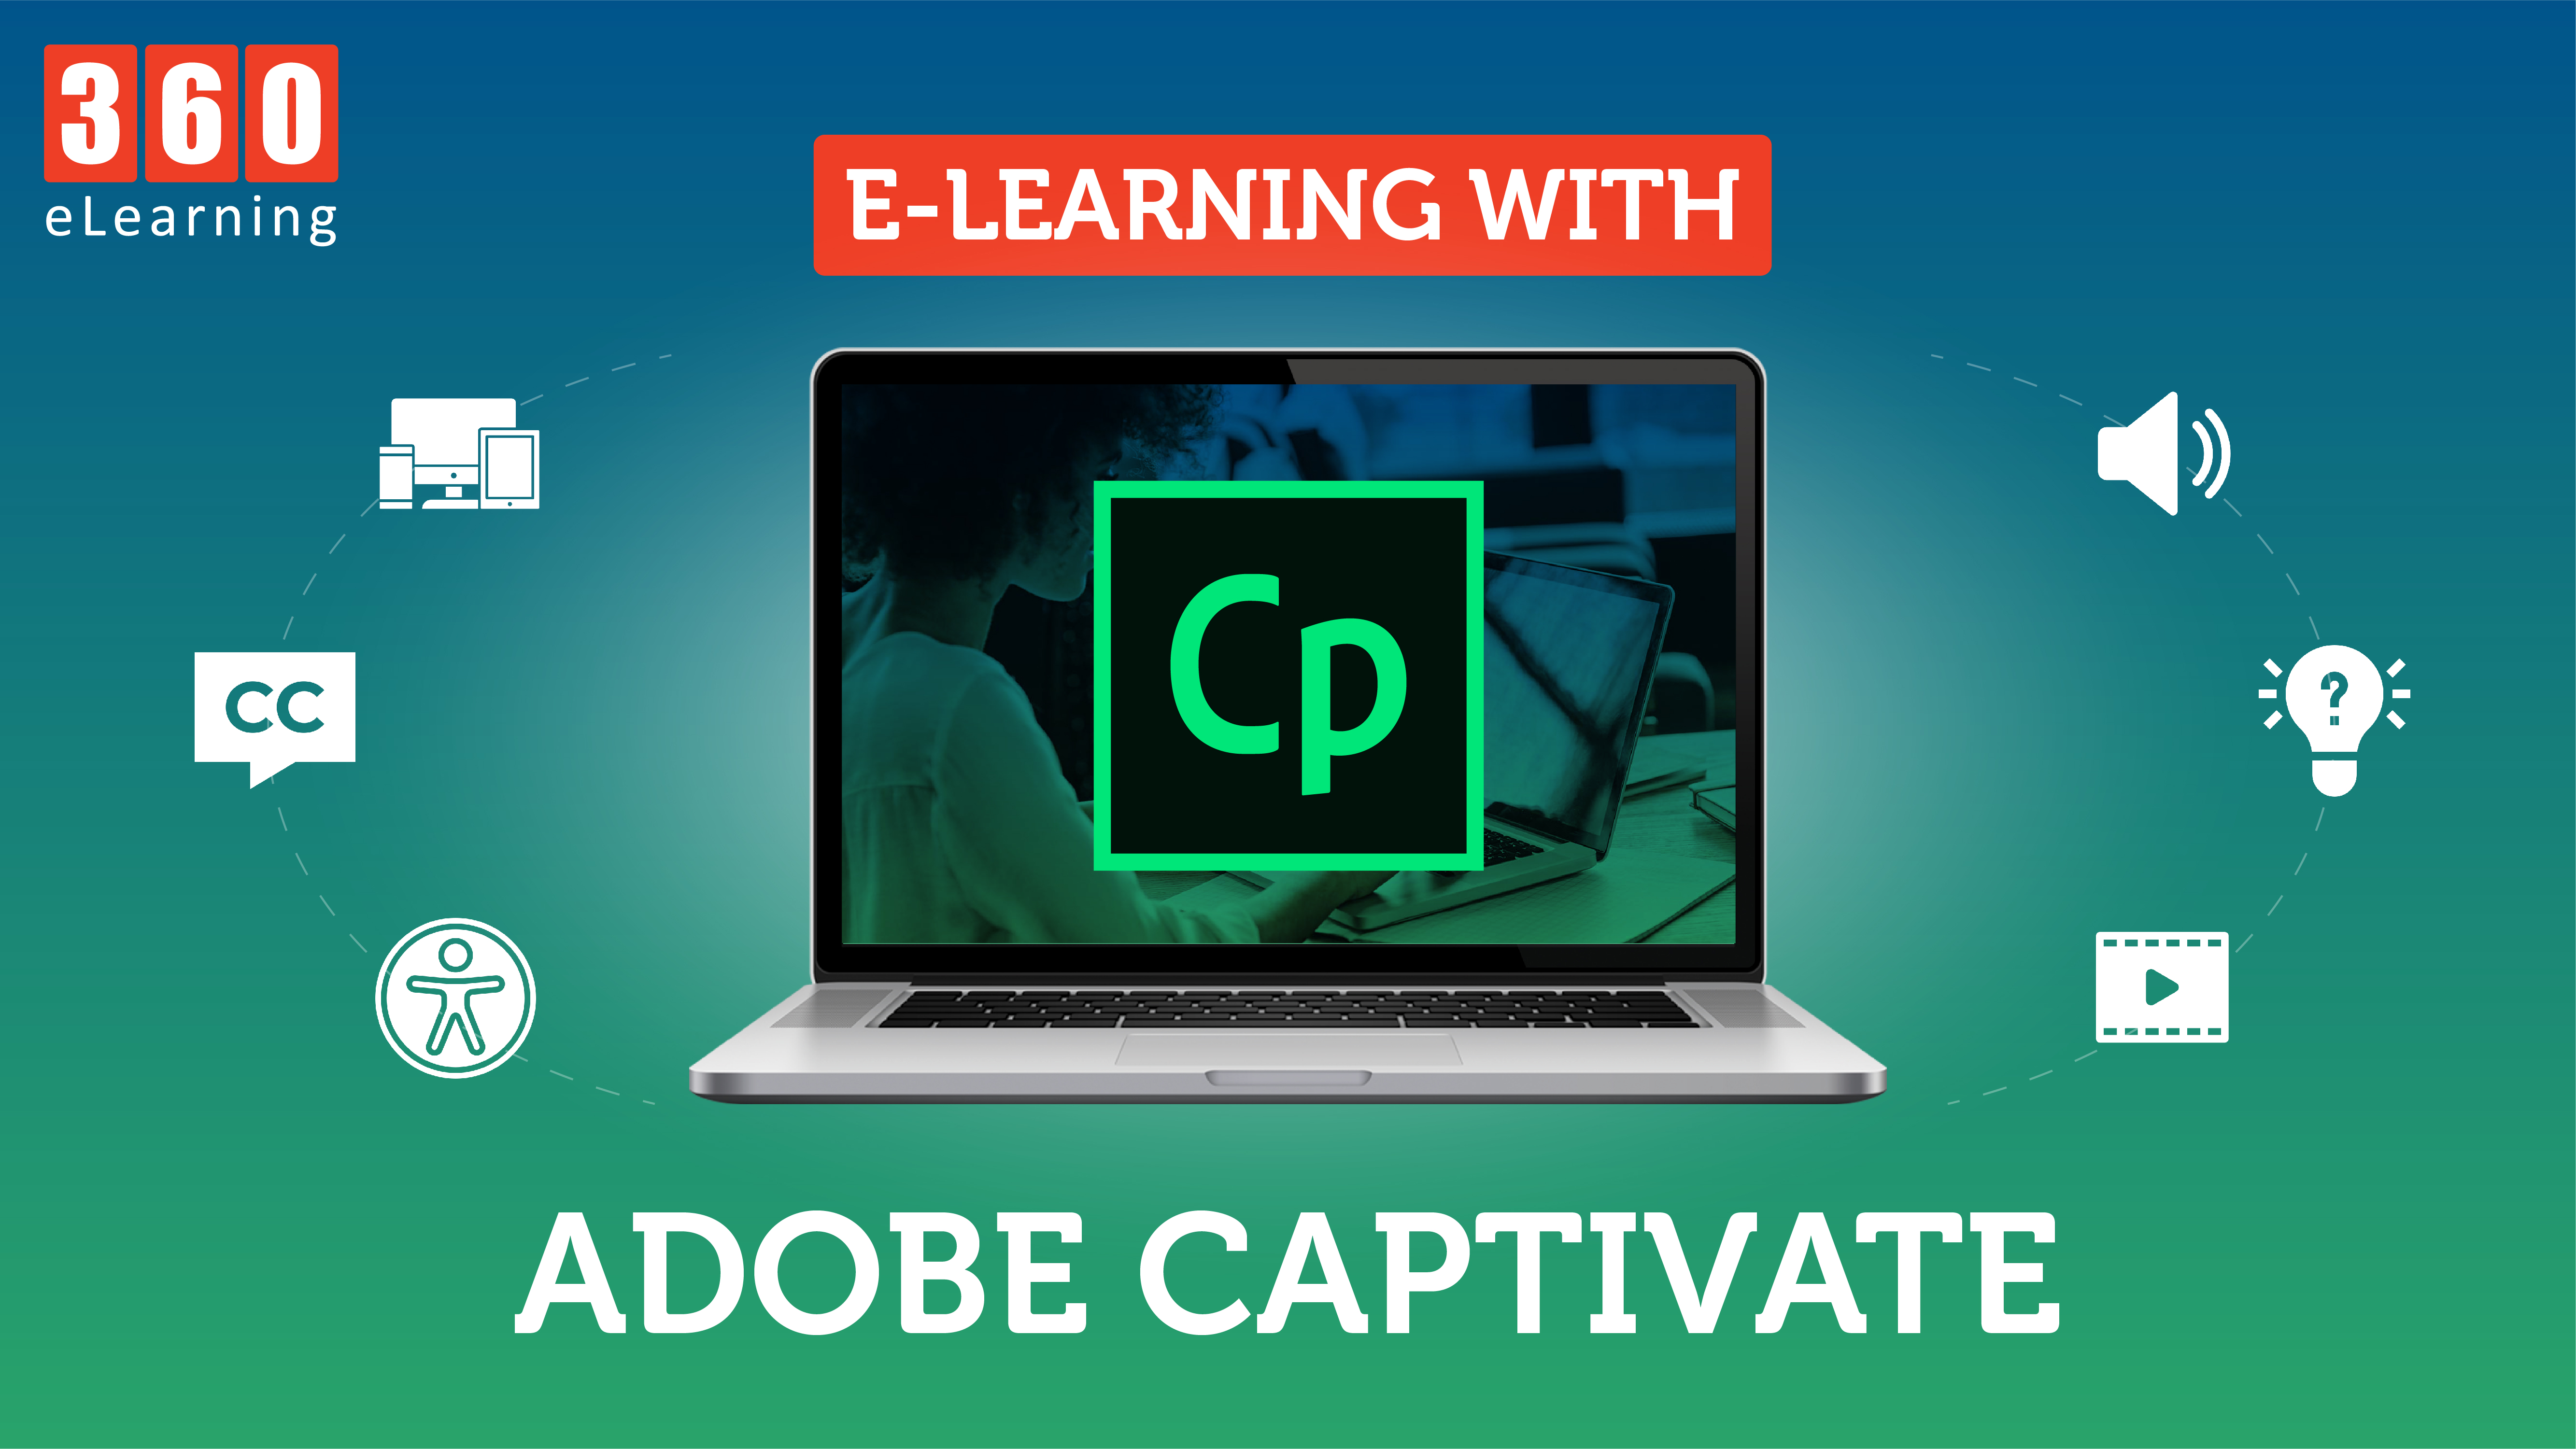 Laptop image with Adobe Captivate icon